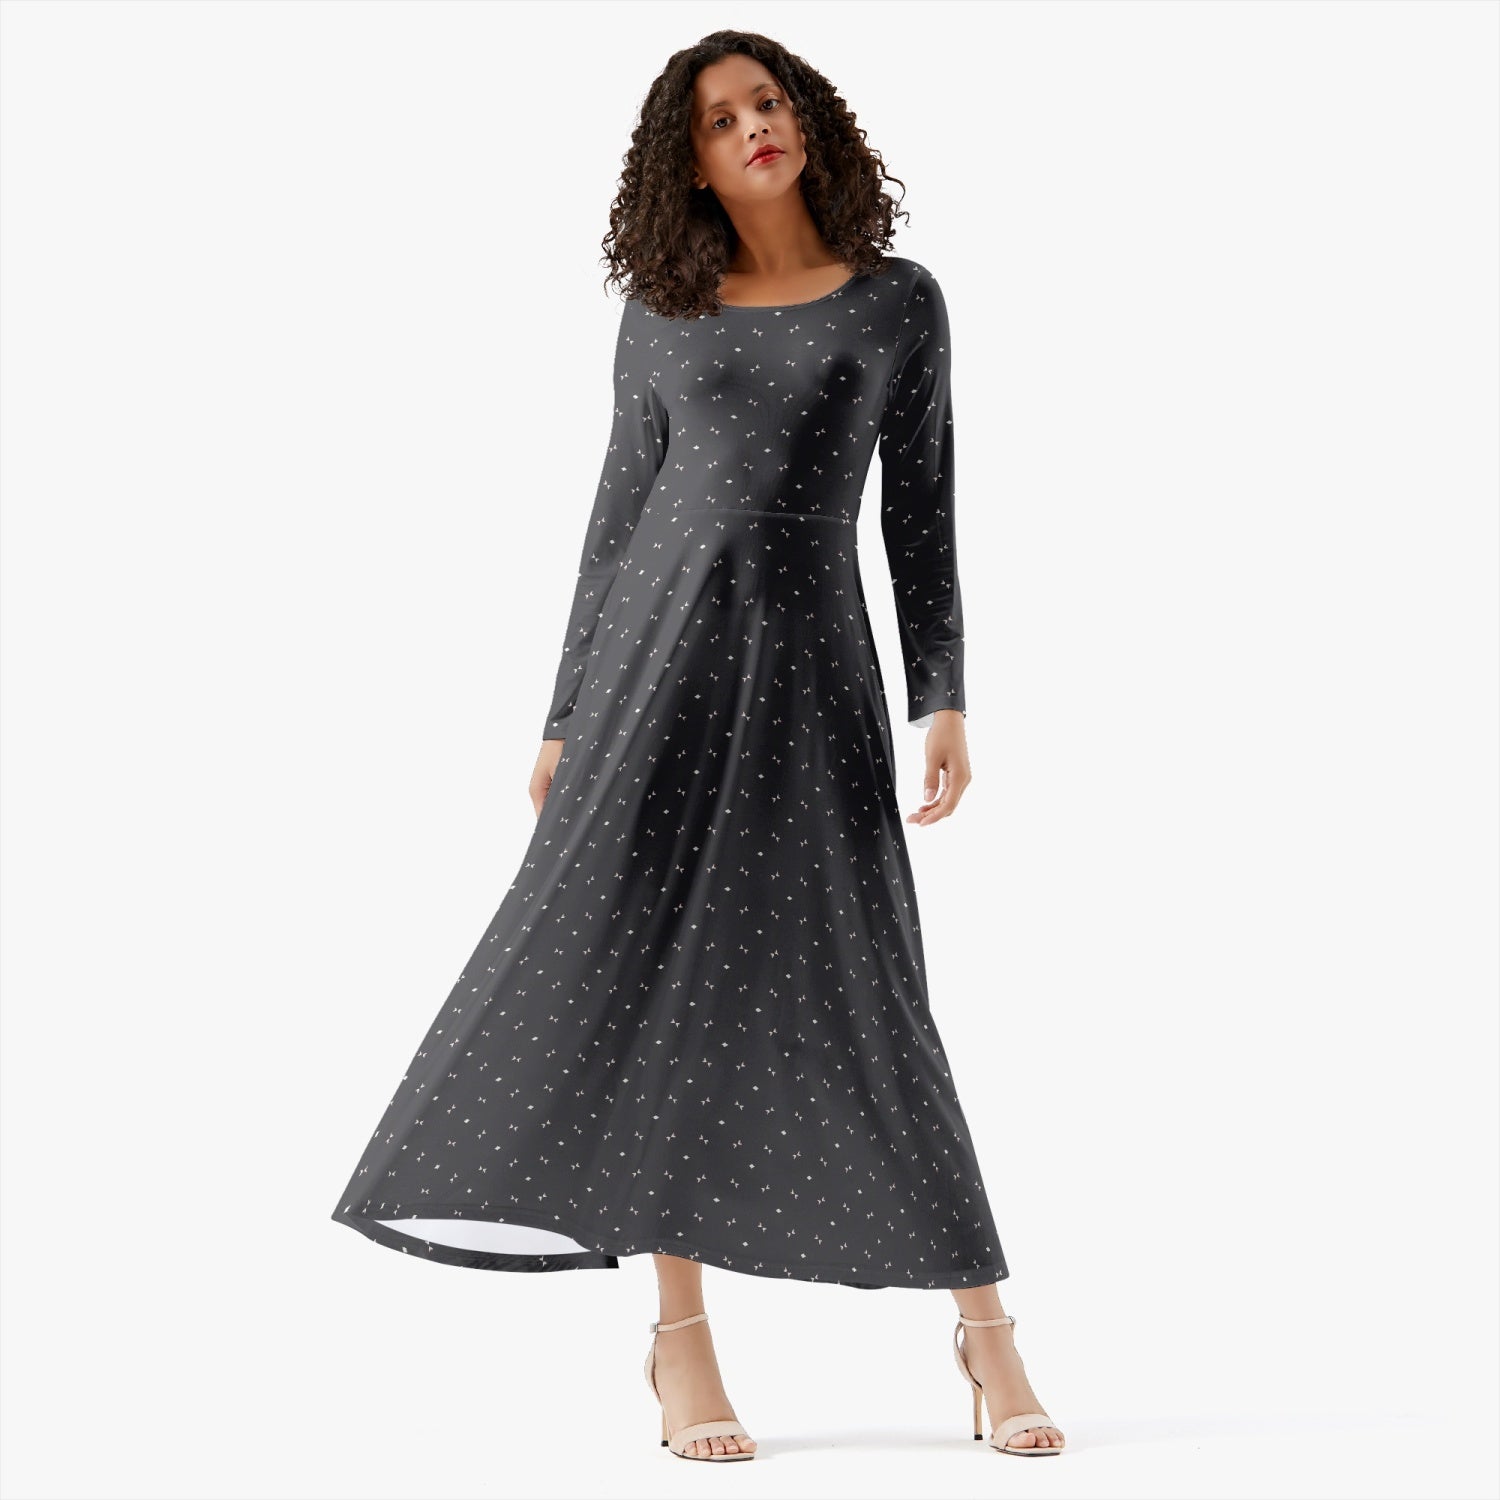 White spots on Black stylish autumn 2022 Women's Long-Sleeve One-piece Dress, by Sensus Studio Design